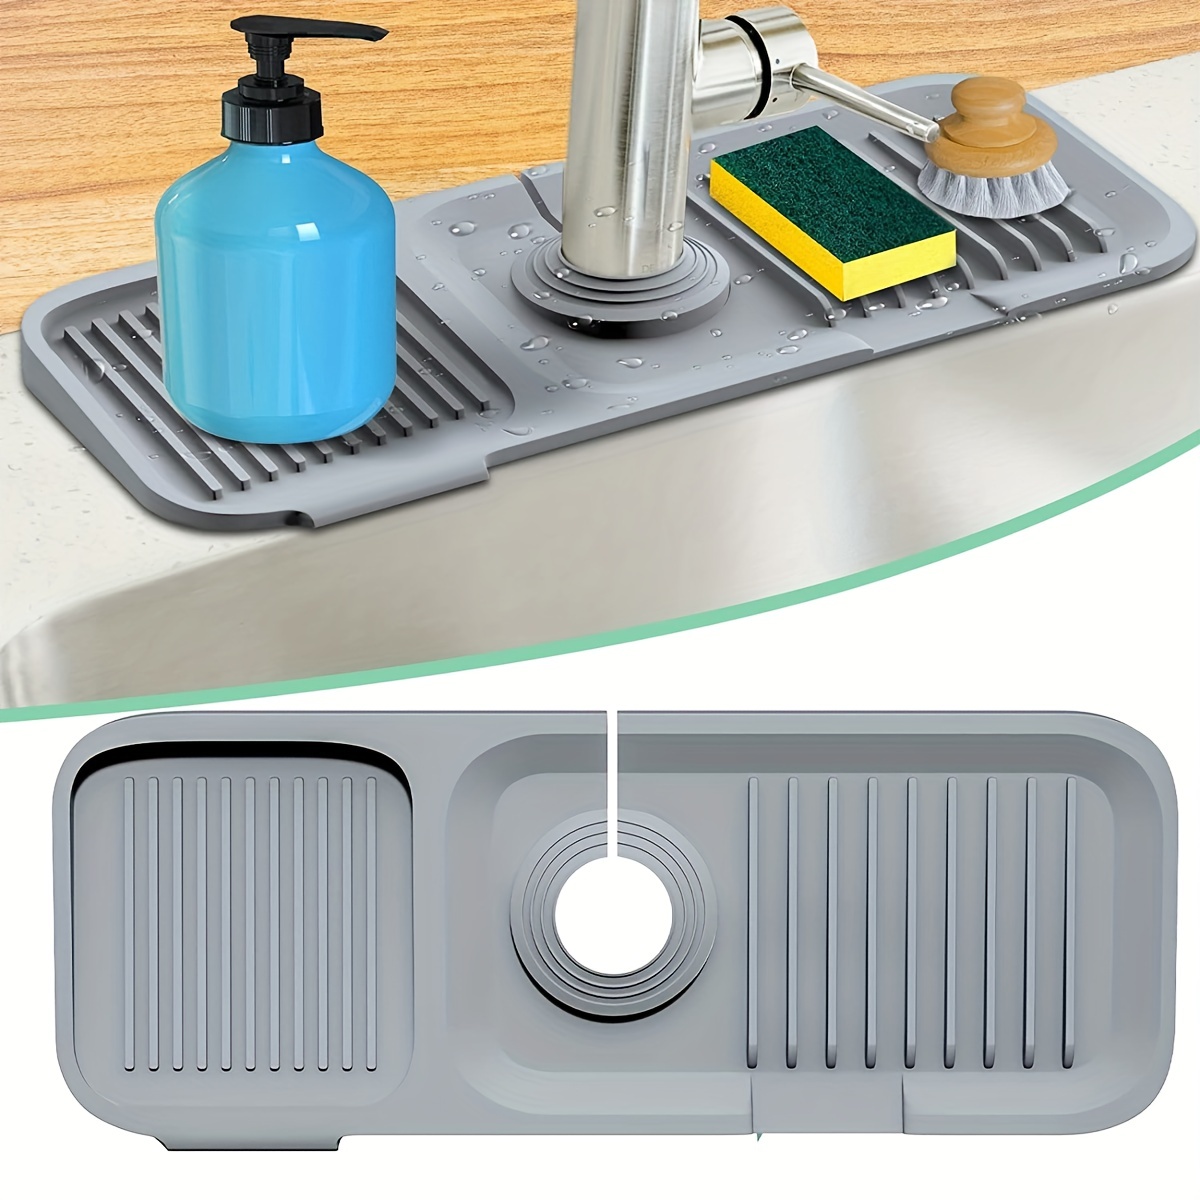 1pc Large Silicone Sponge Holder, Sink Organizer Caddy, Drain Storage Tray  For Dish Sponge, Soap Dispenser, Scrubber